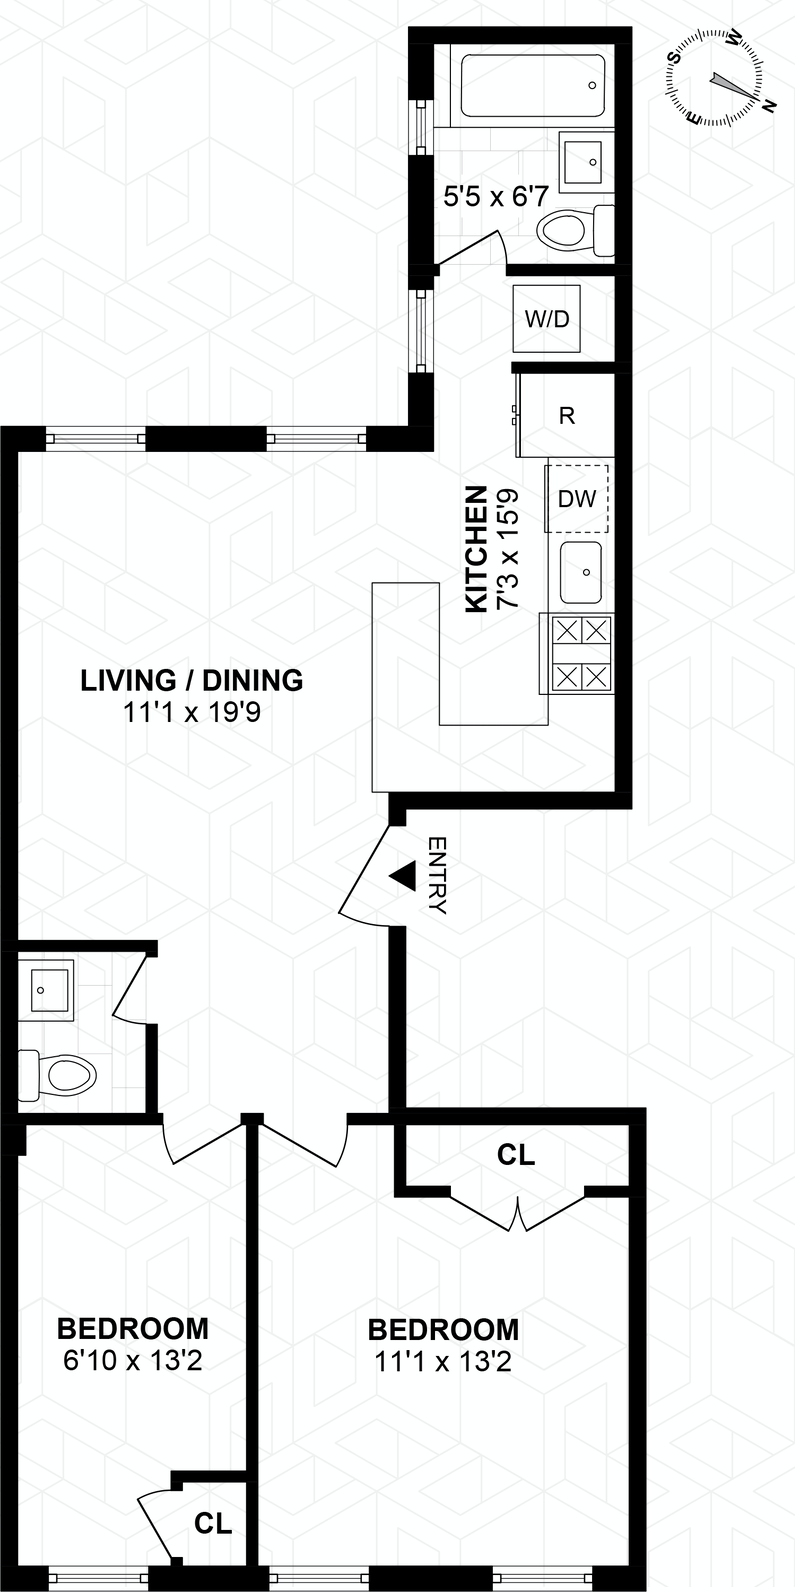 Floorplan for 44 Woodhull Street, 3